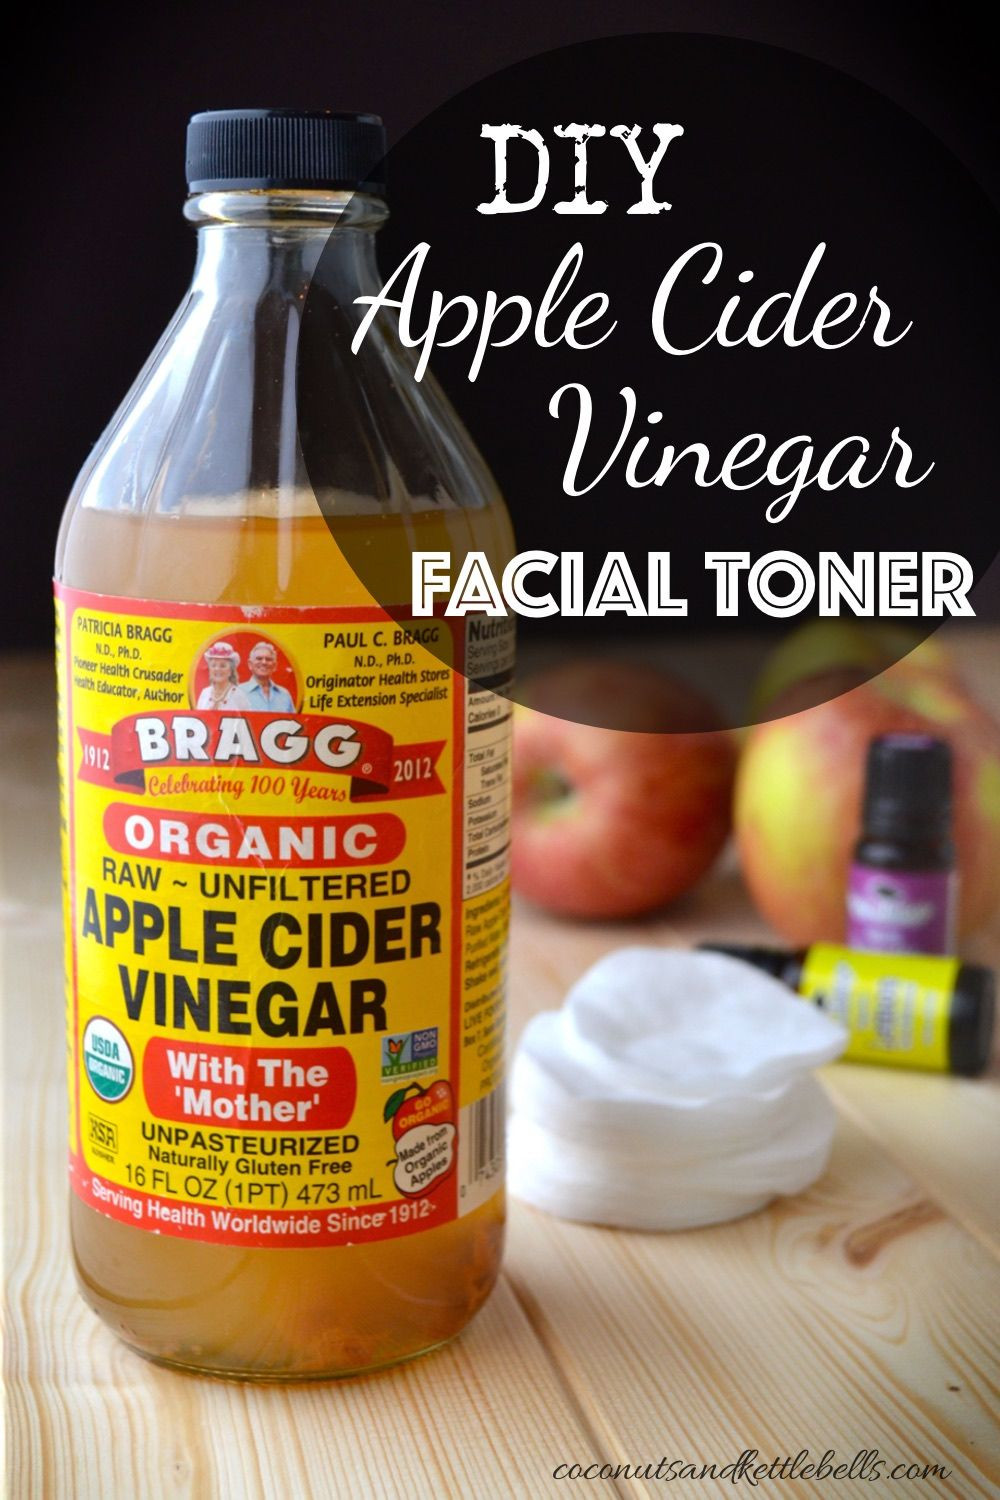 DIY Hair Toner With Vinegar
 DIY Apple Cider Vinegar Facial Toner